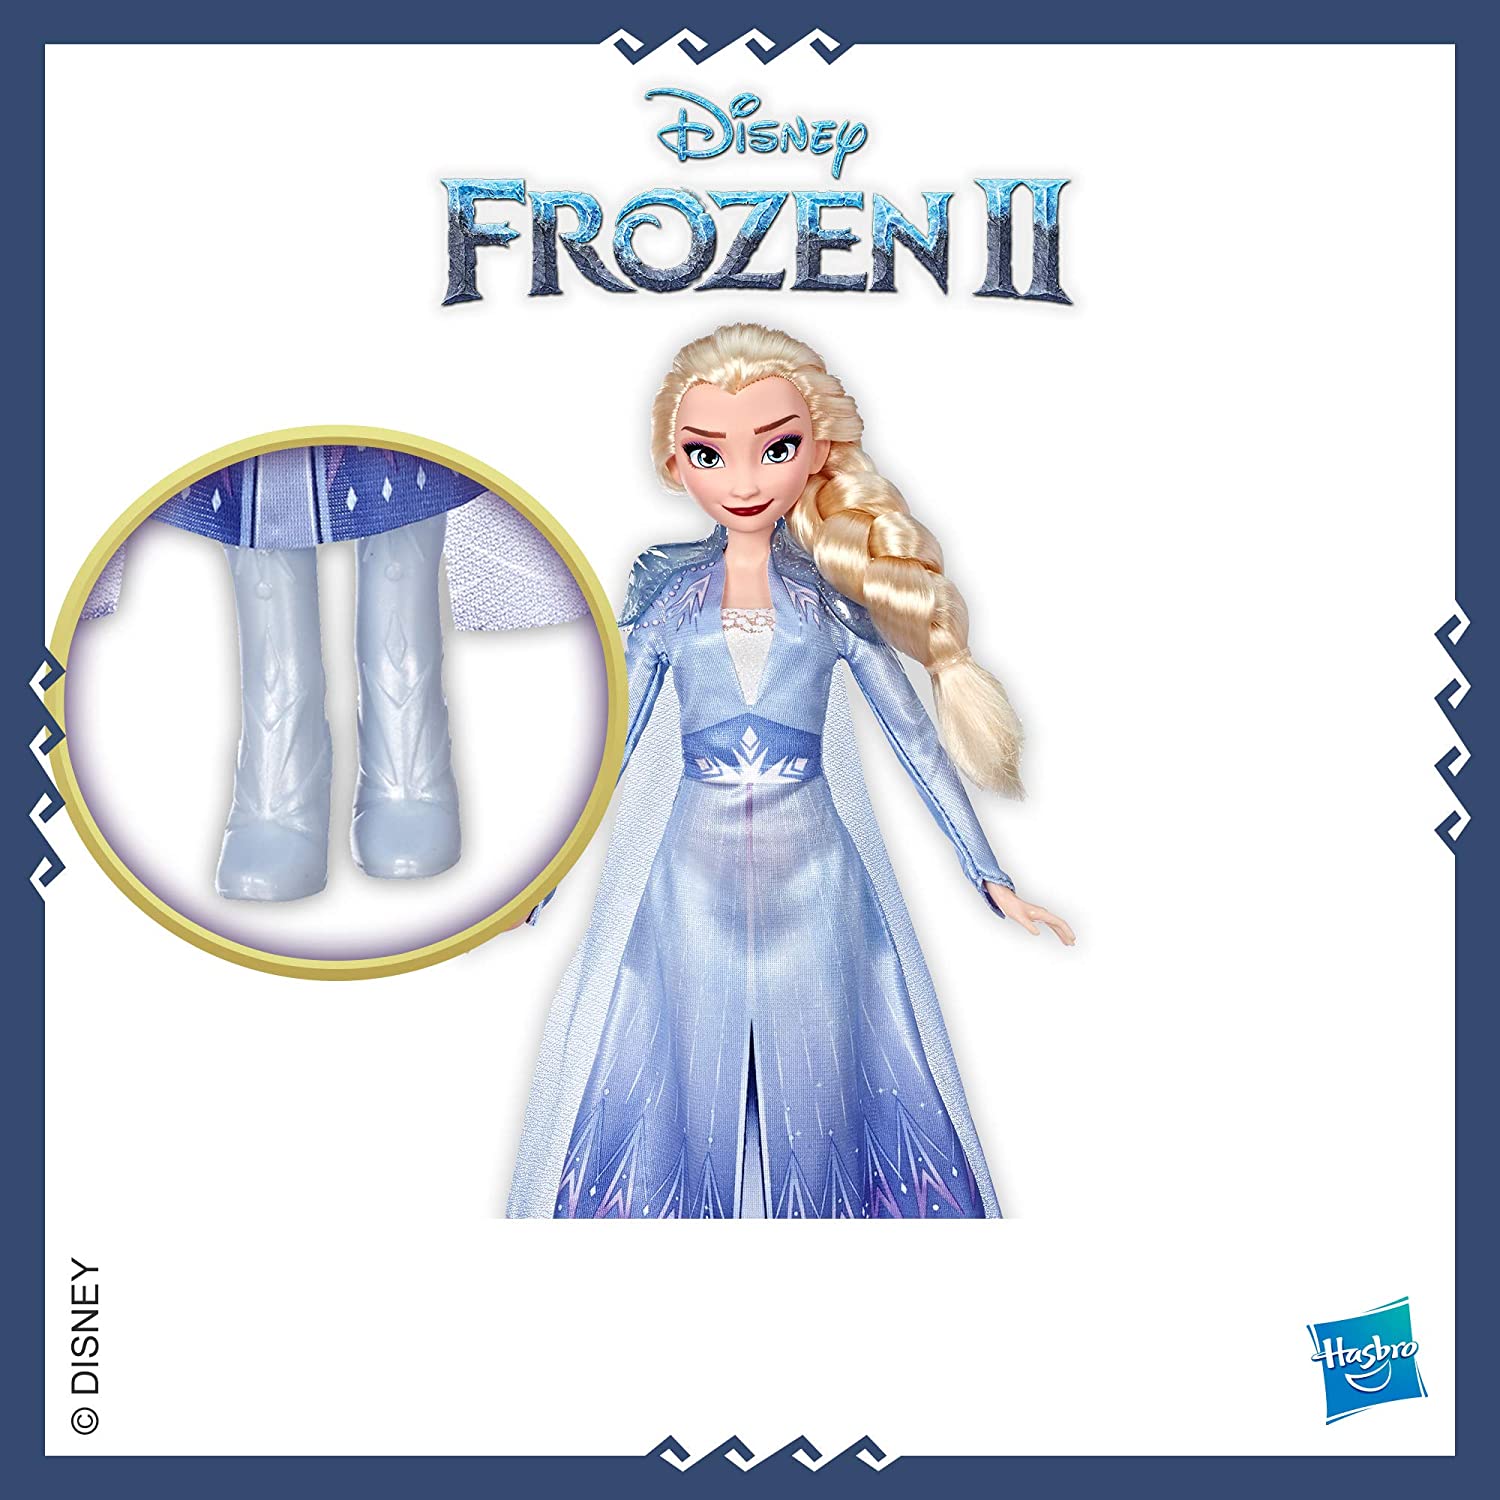 Boneca Disney Frozen Elsa Fashion Inspirada em Frozen 2 Oficial Licenciado